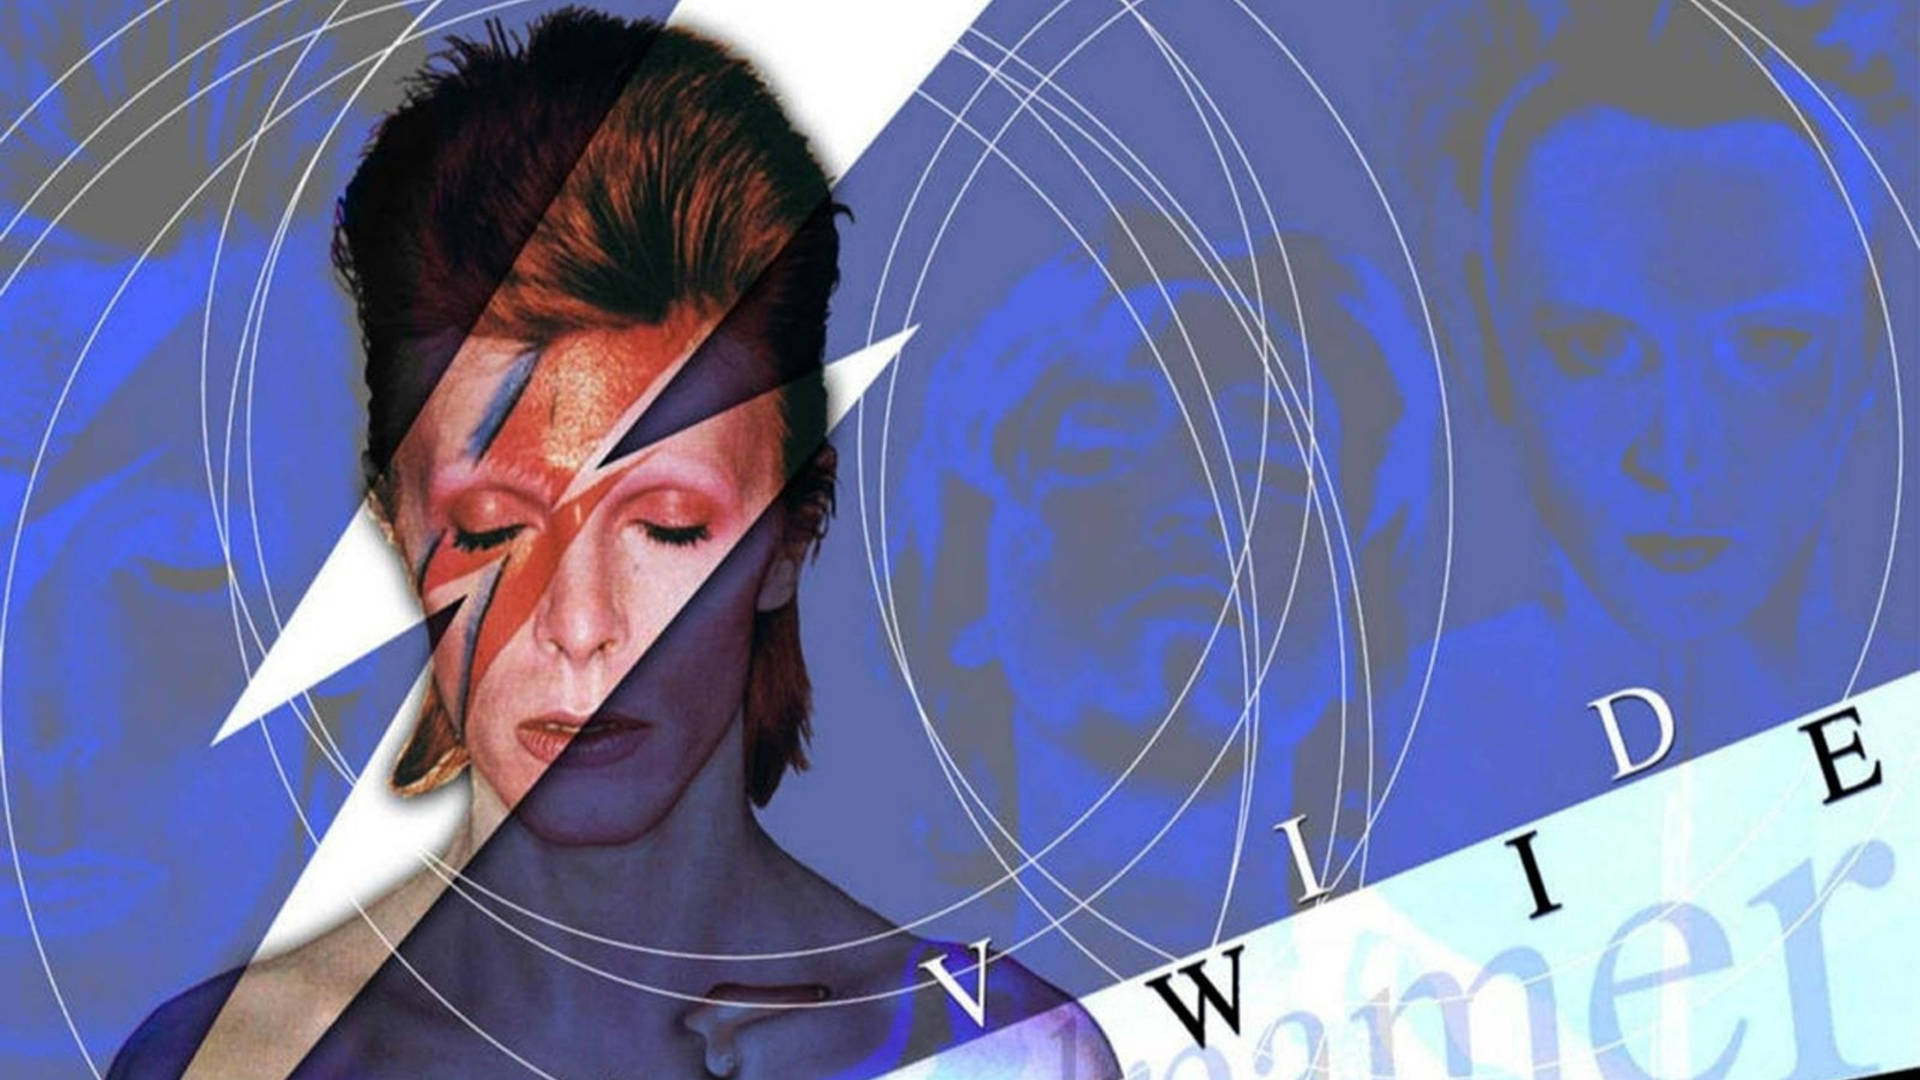 David Bowie Lighting Icon Digital Art Background